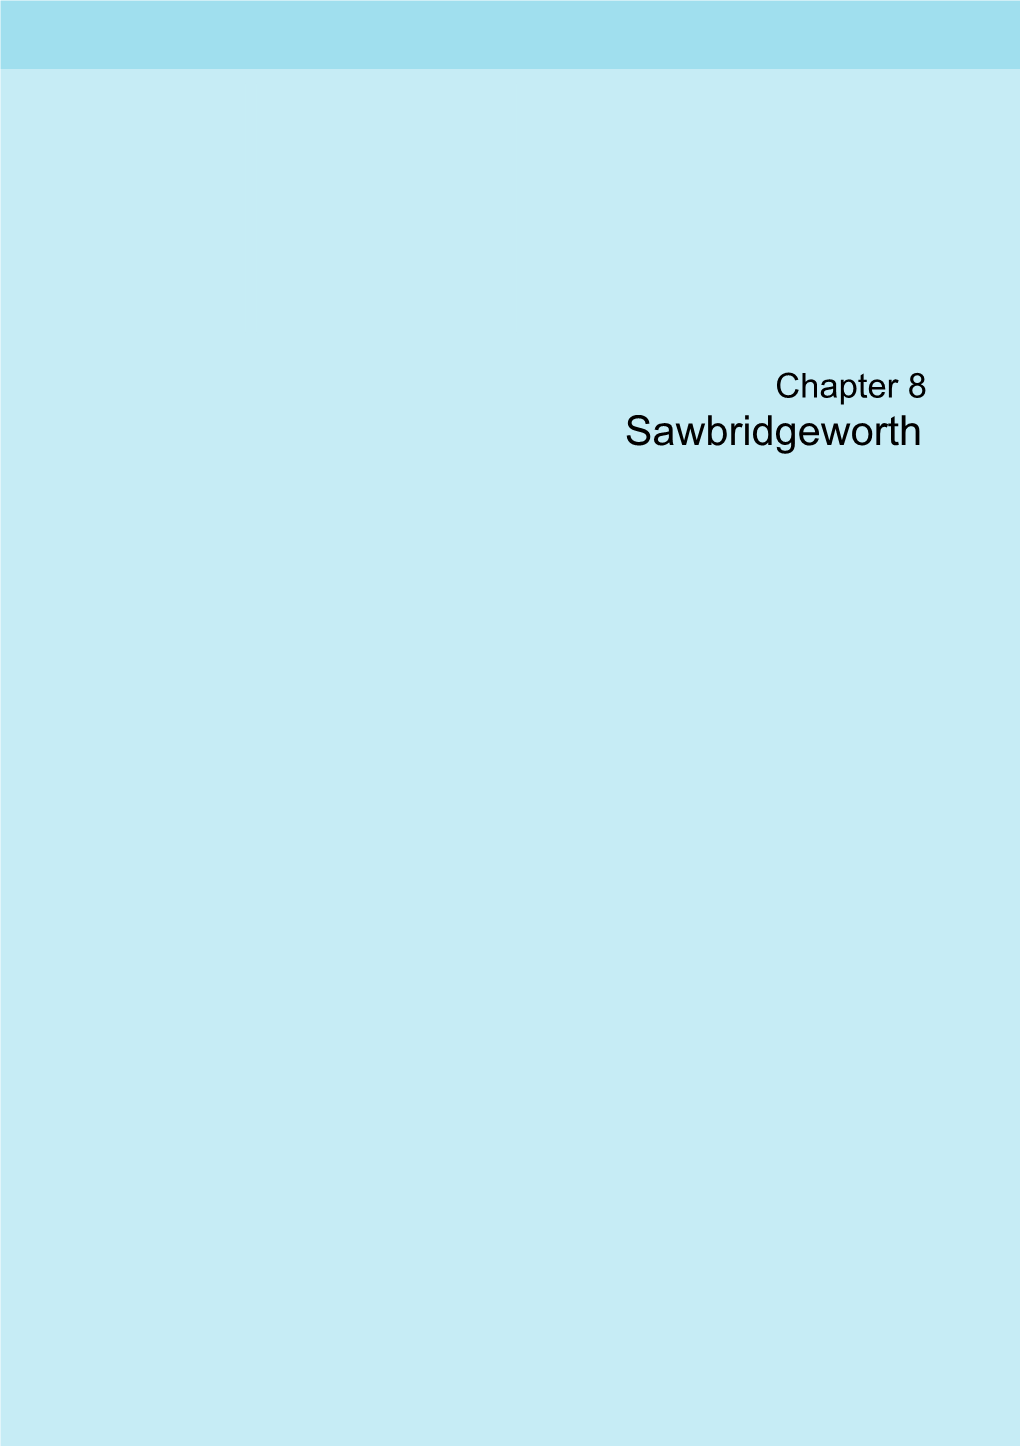 8. Sawbridgeworth (SAWB Policies)